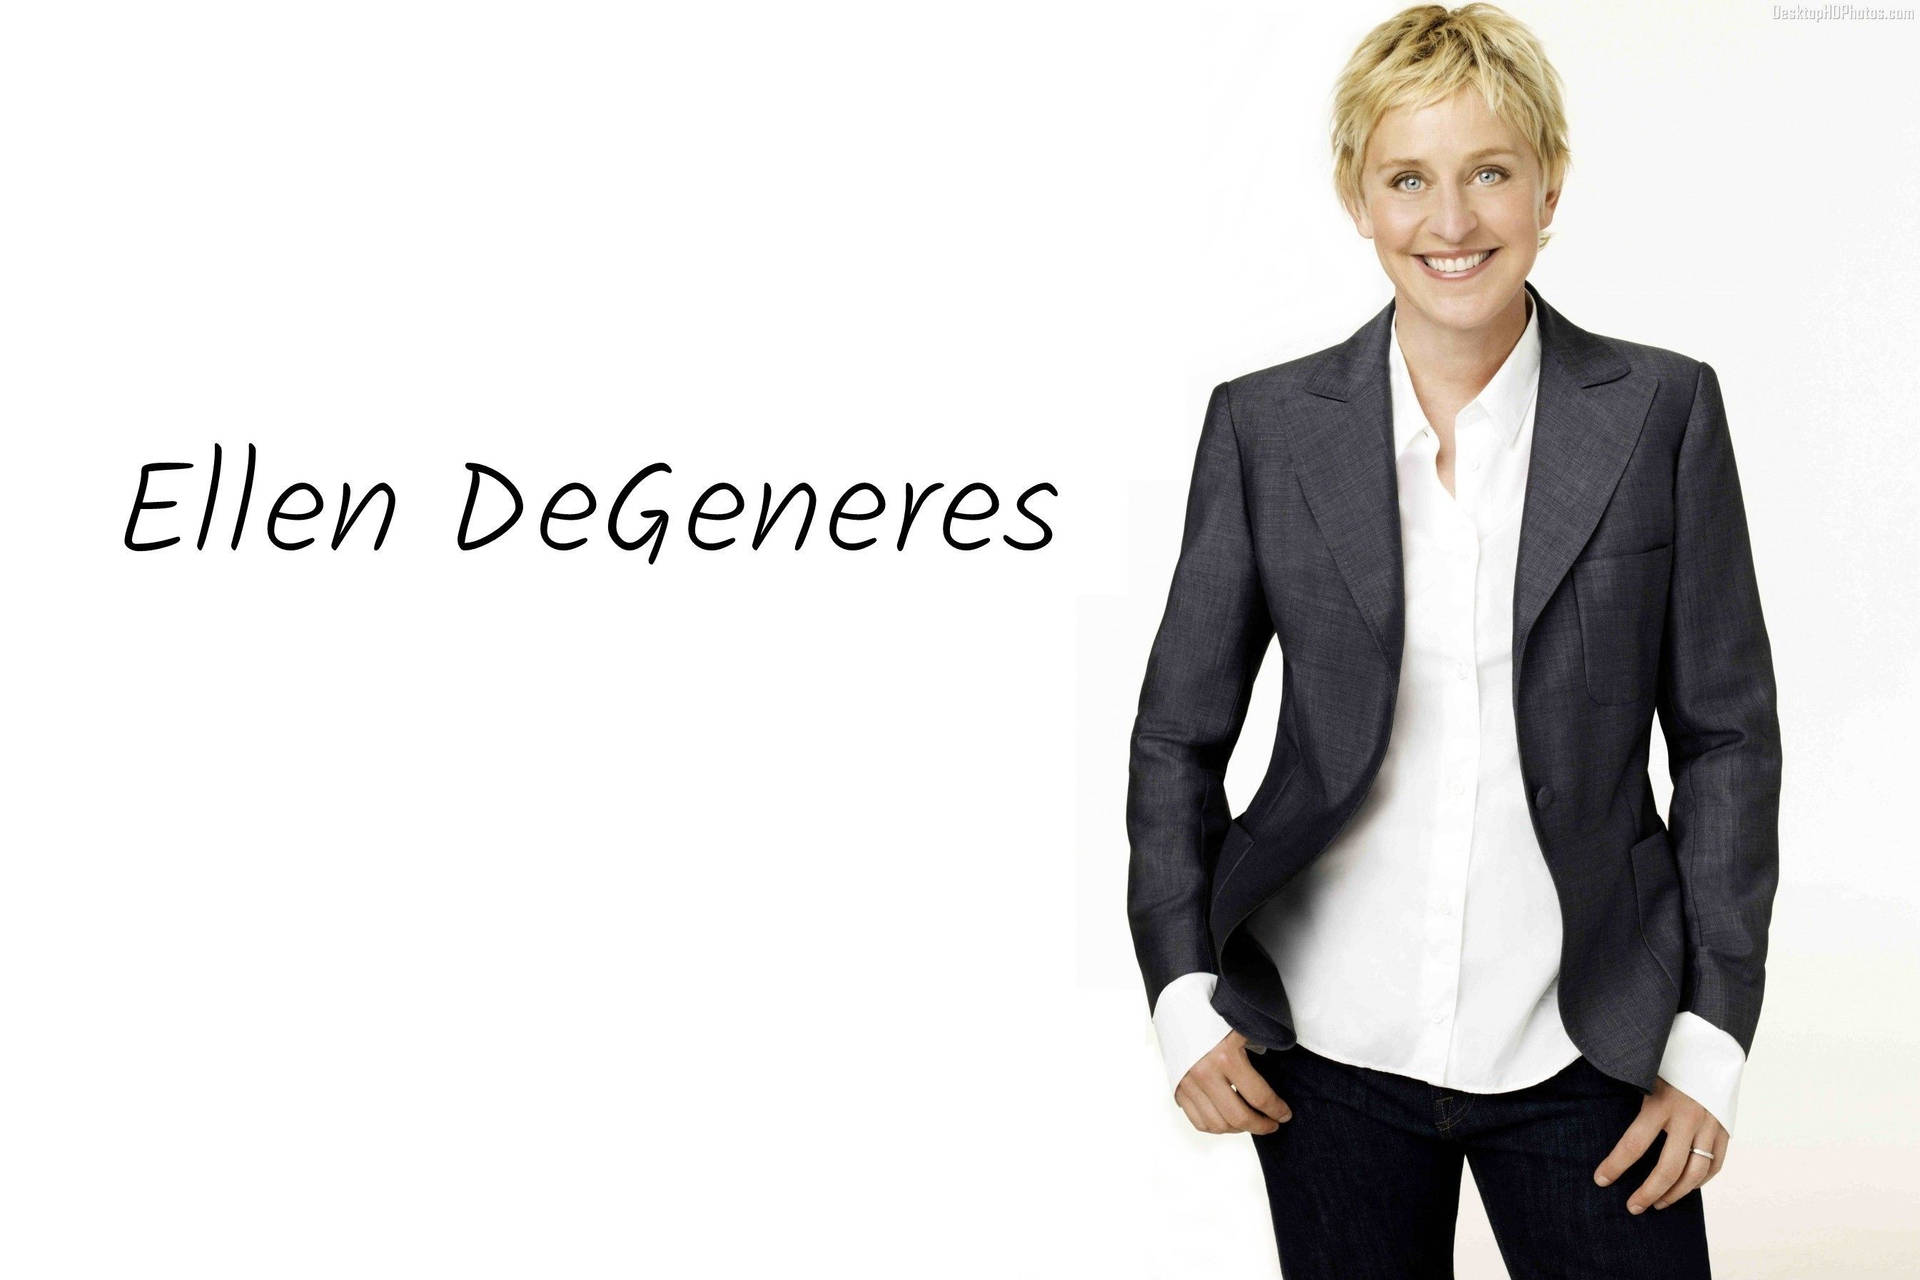 Ellen Degeneres Poster With His Name Background